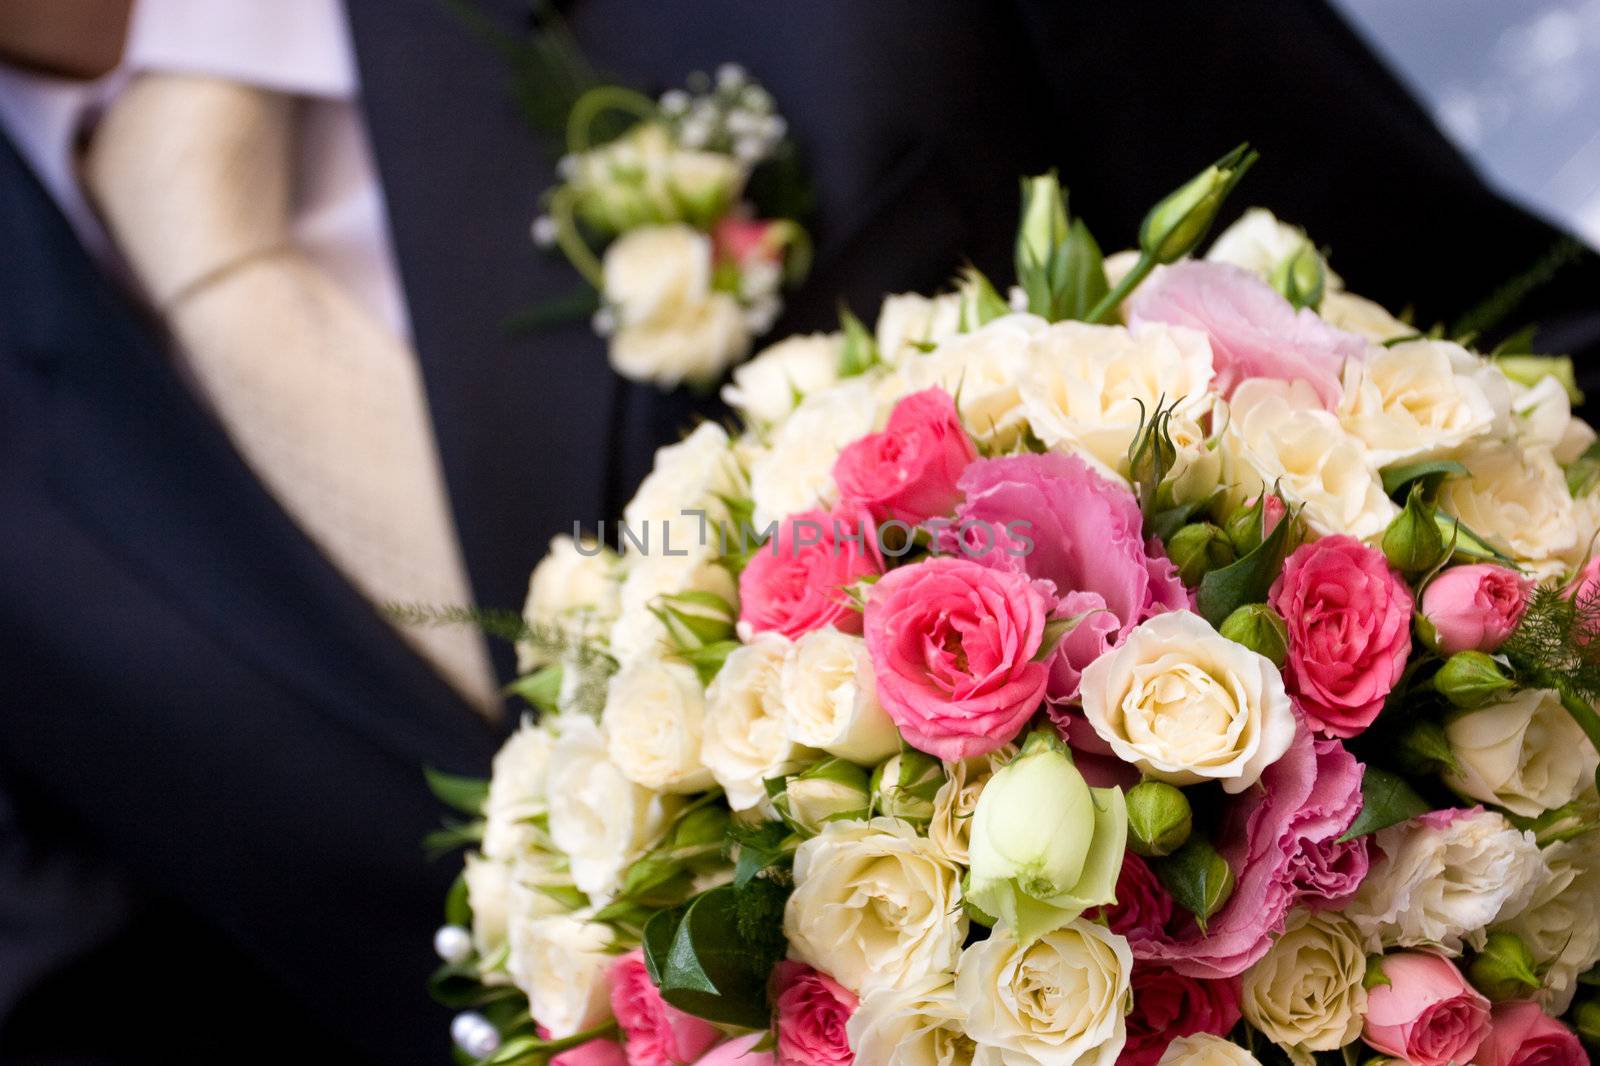 groom, tie and flower bouquet